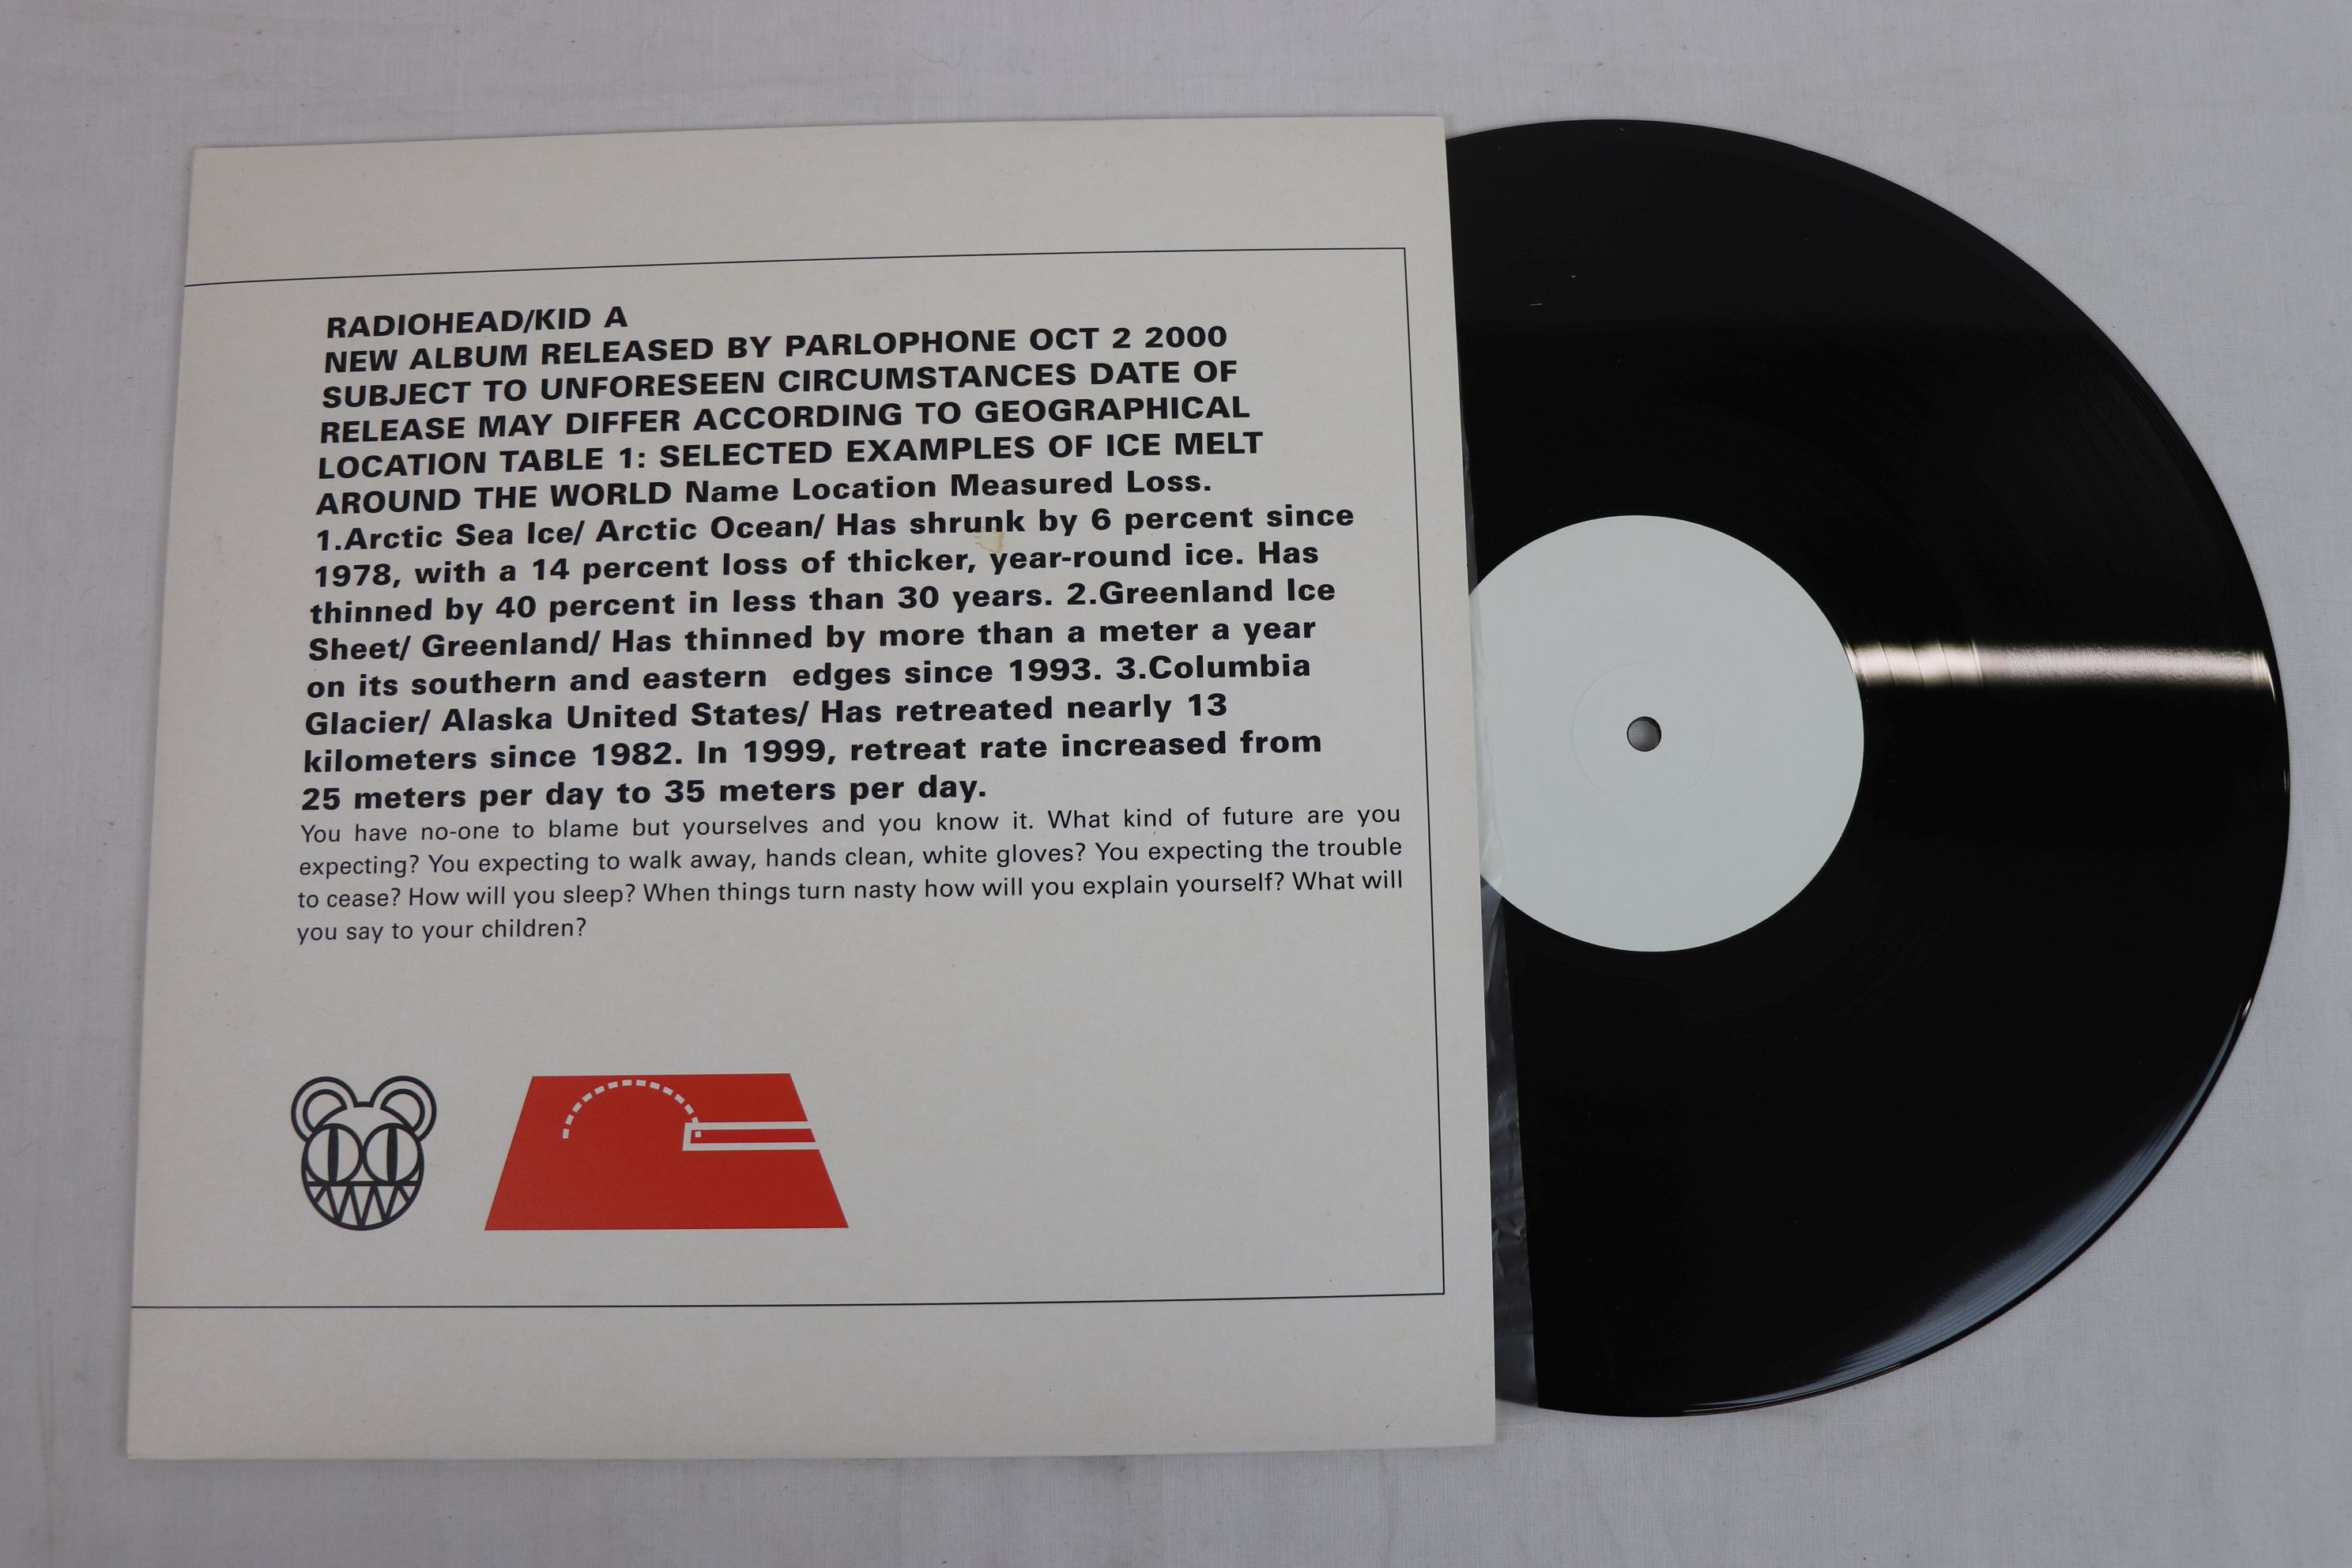 Vinyl - Radiohead Idioteque test pressing on Parlophone 12KIDA6 vg++ - Image 3 of 5